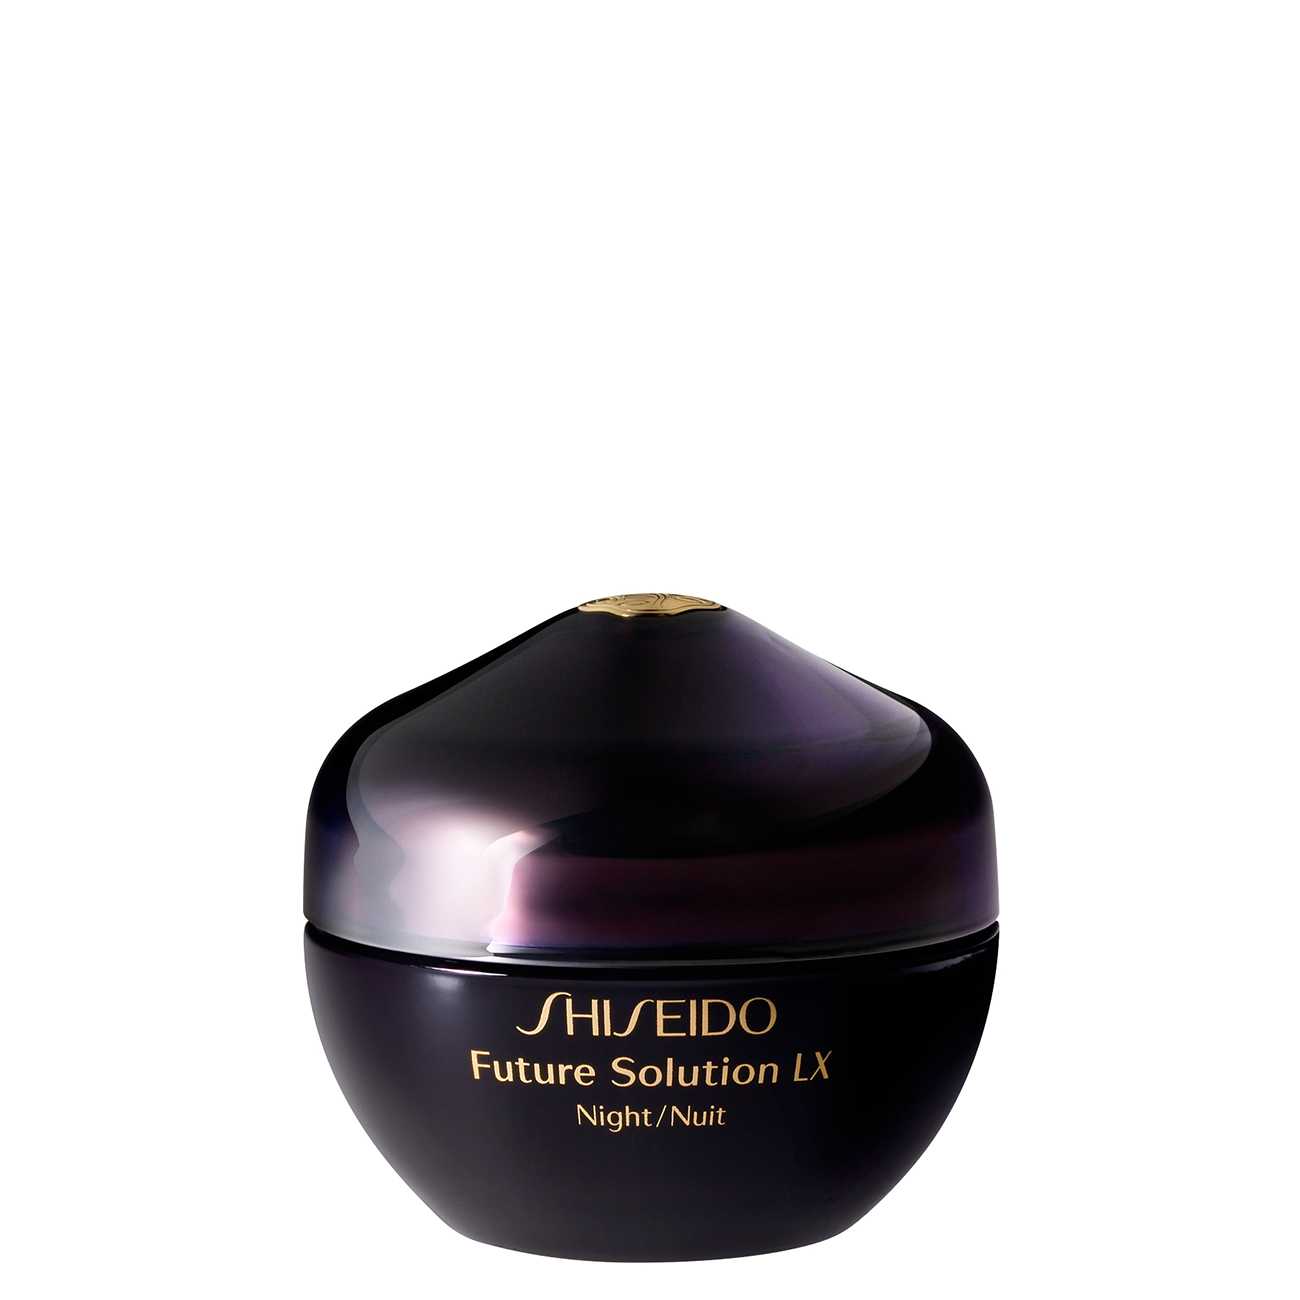 FUTURE SOLUTION LX Shiseido bestvalue.eu